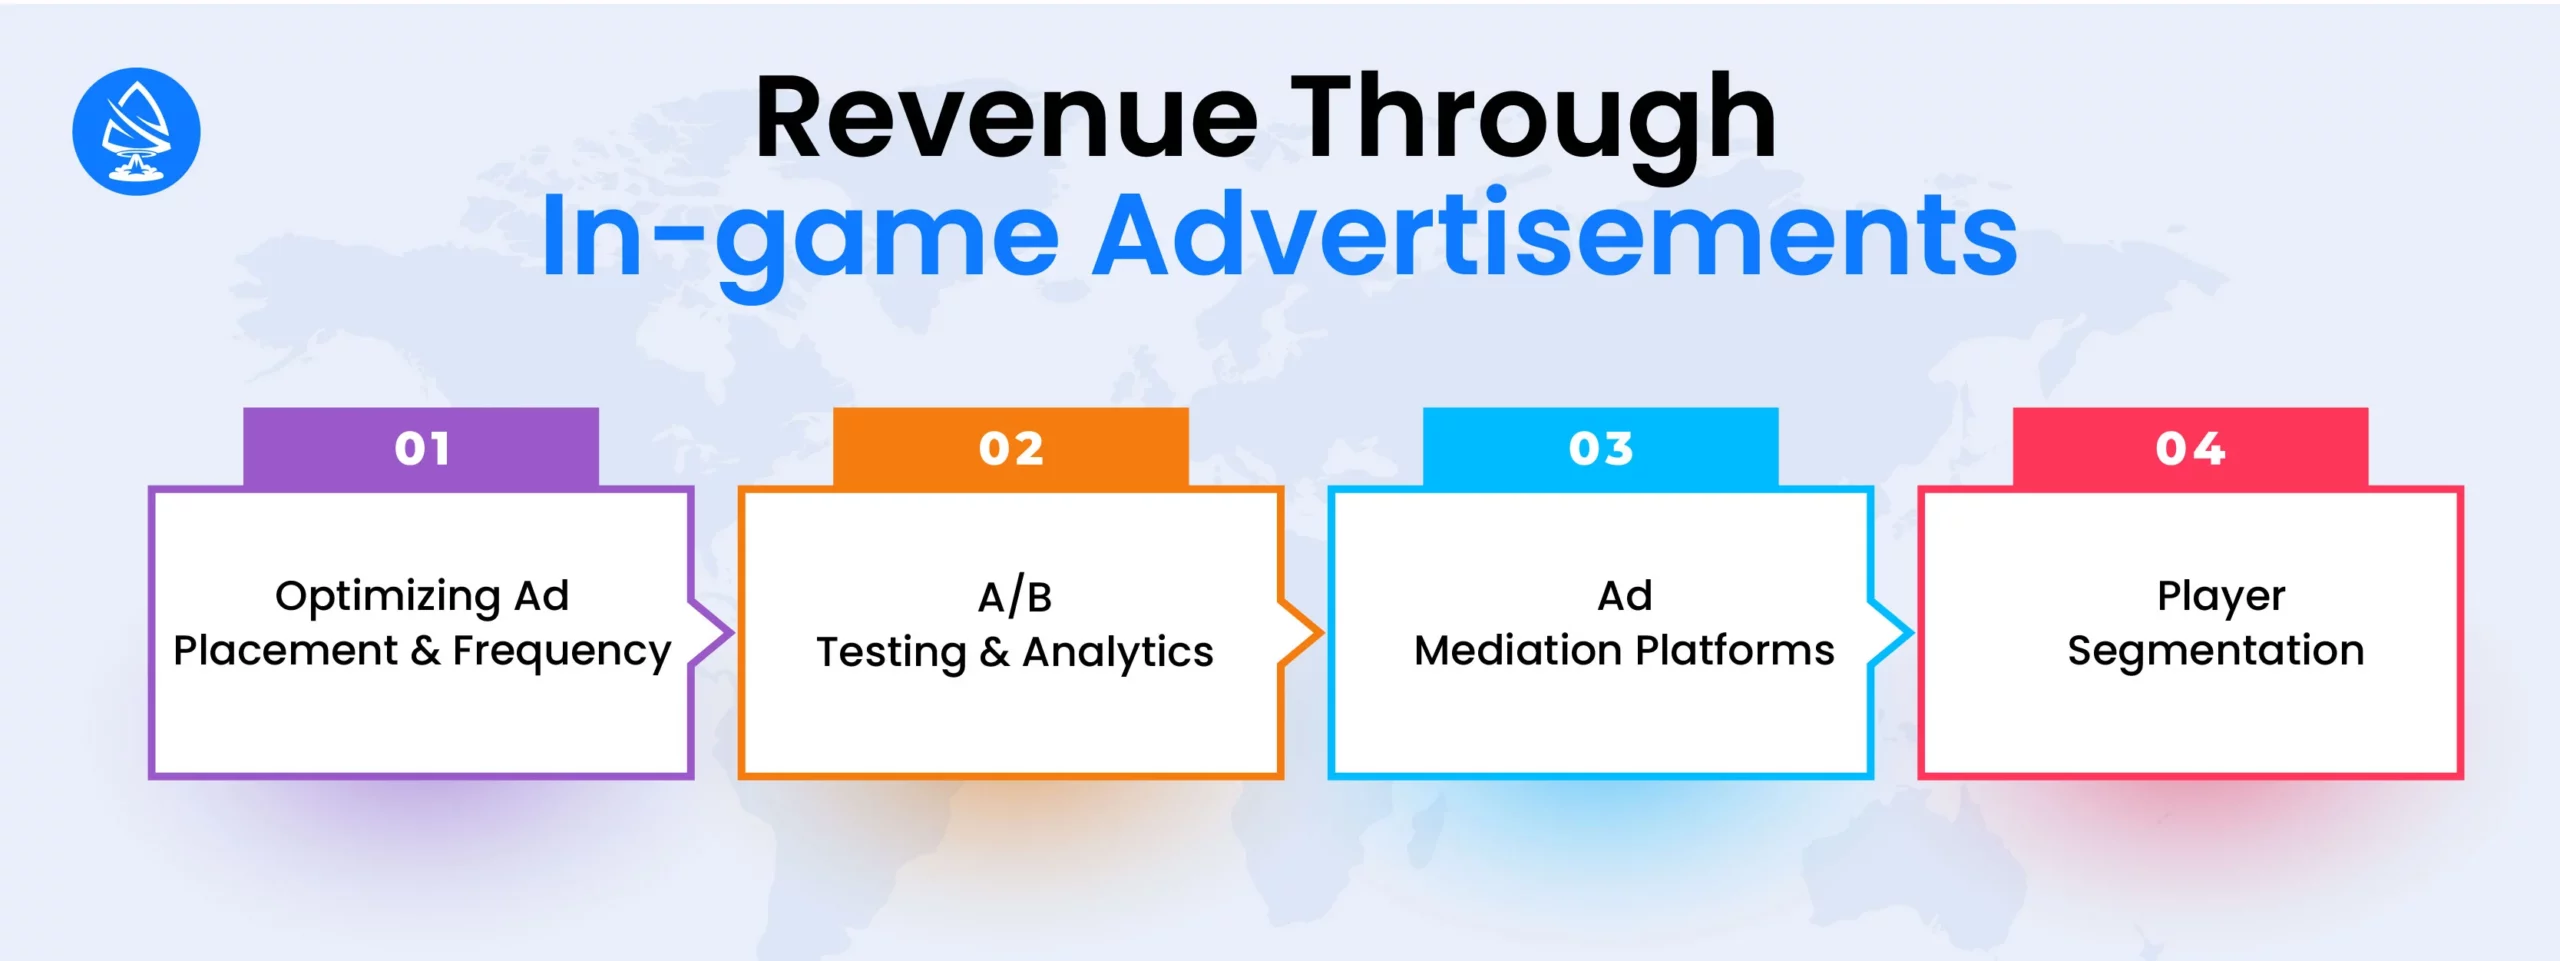 Revenue Through In-game Advertisements